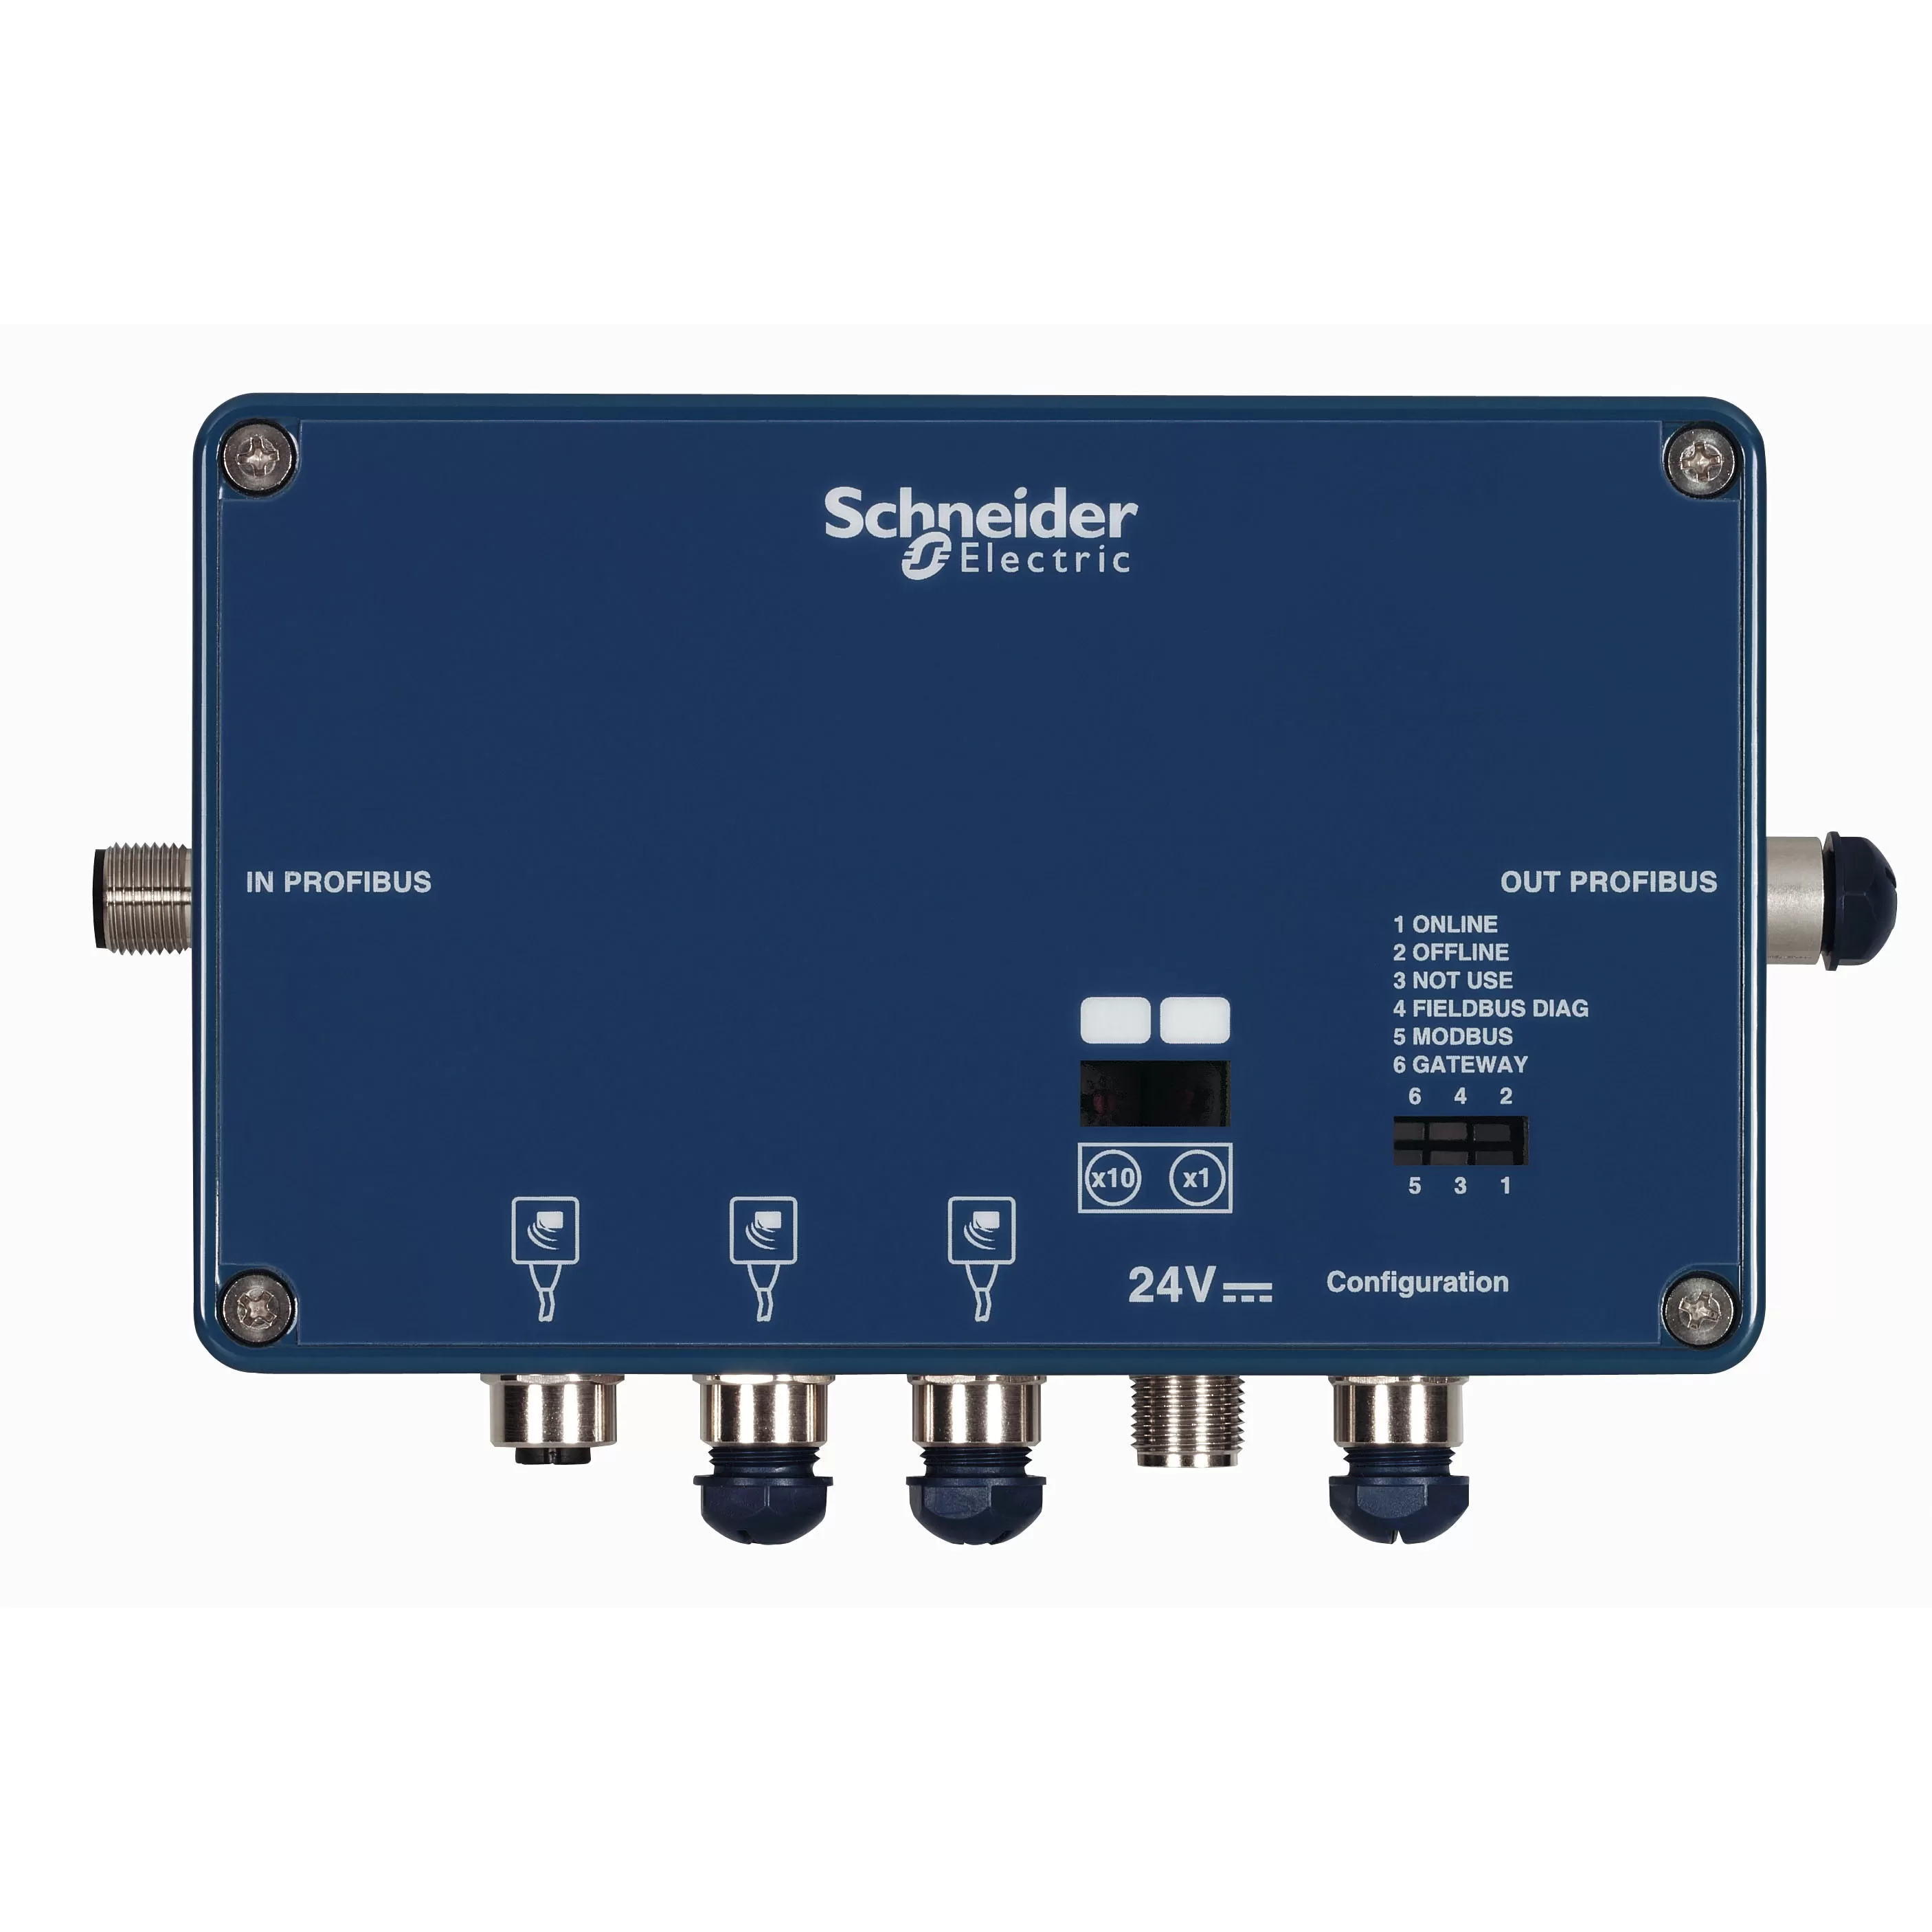 Schneider Electric XG RFID PROFIBUS DP Anschlusskasten - 3 Kanäle für XGCS-Smart Antenna XGSZ33PDP